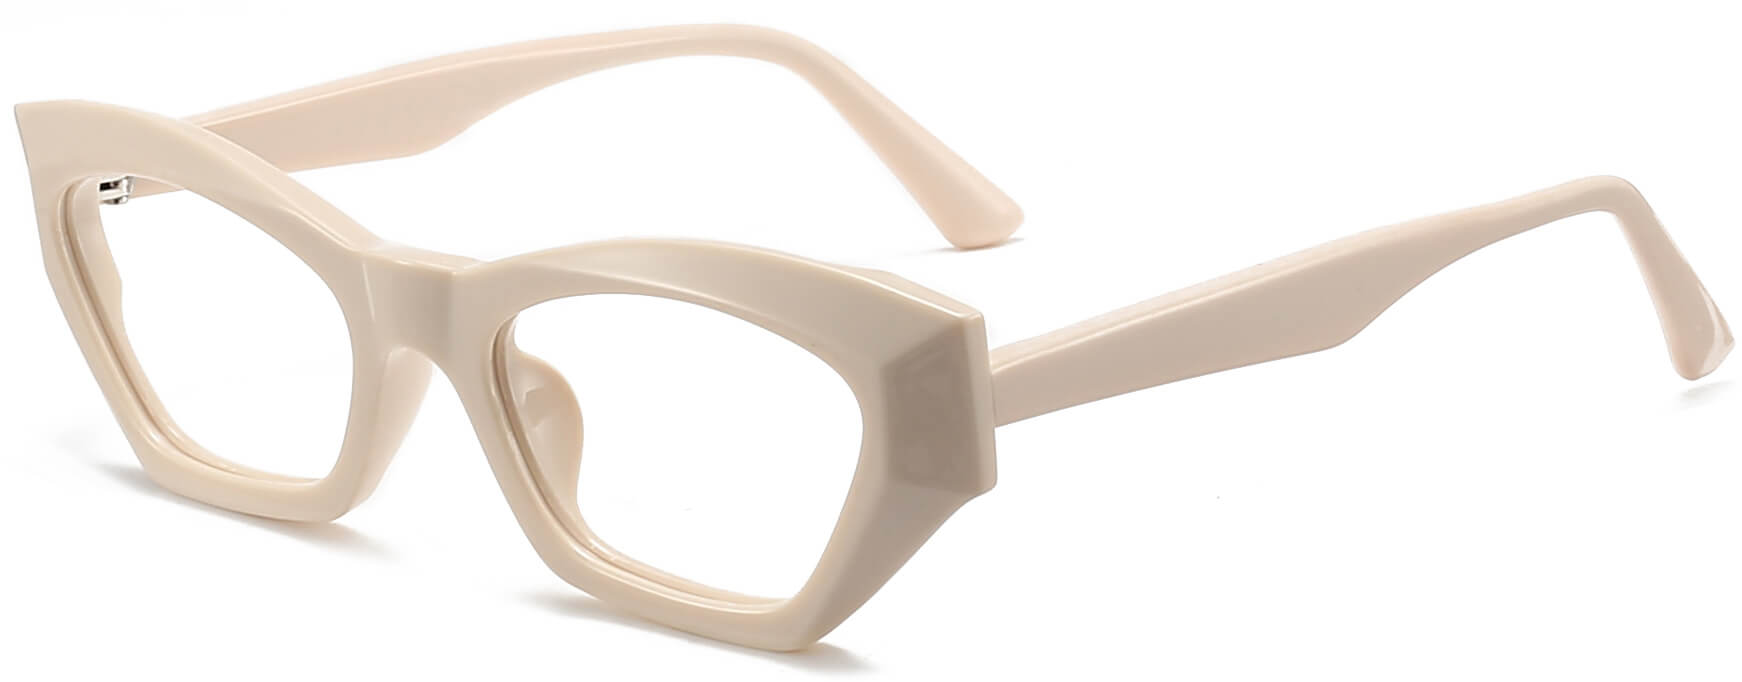 Winnie Cateye White Eyeglasses from ANRRI, angle view